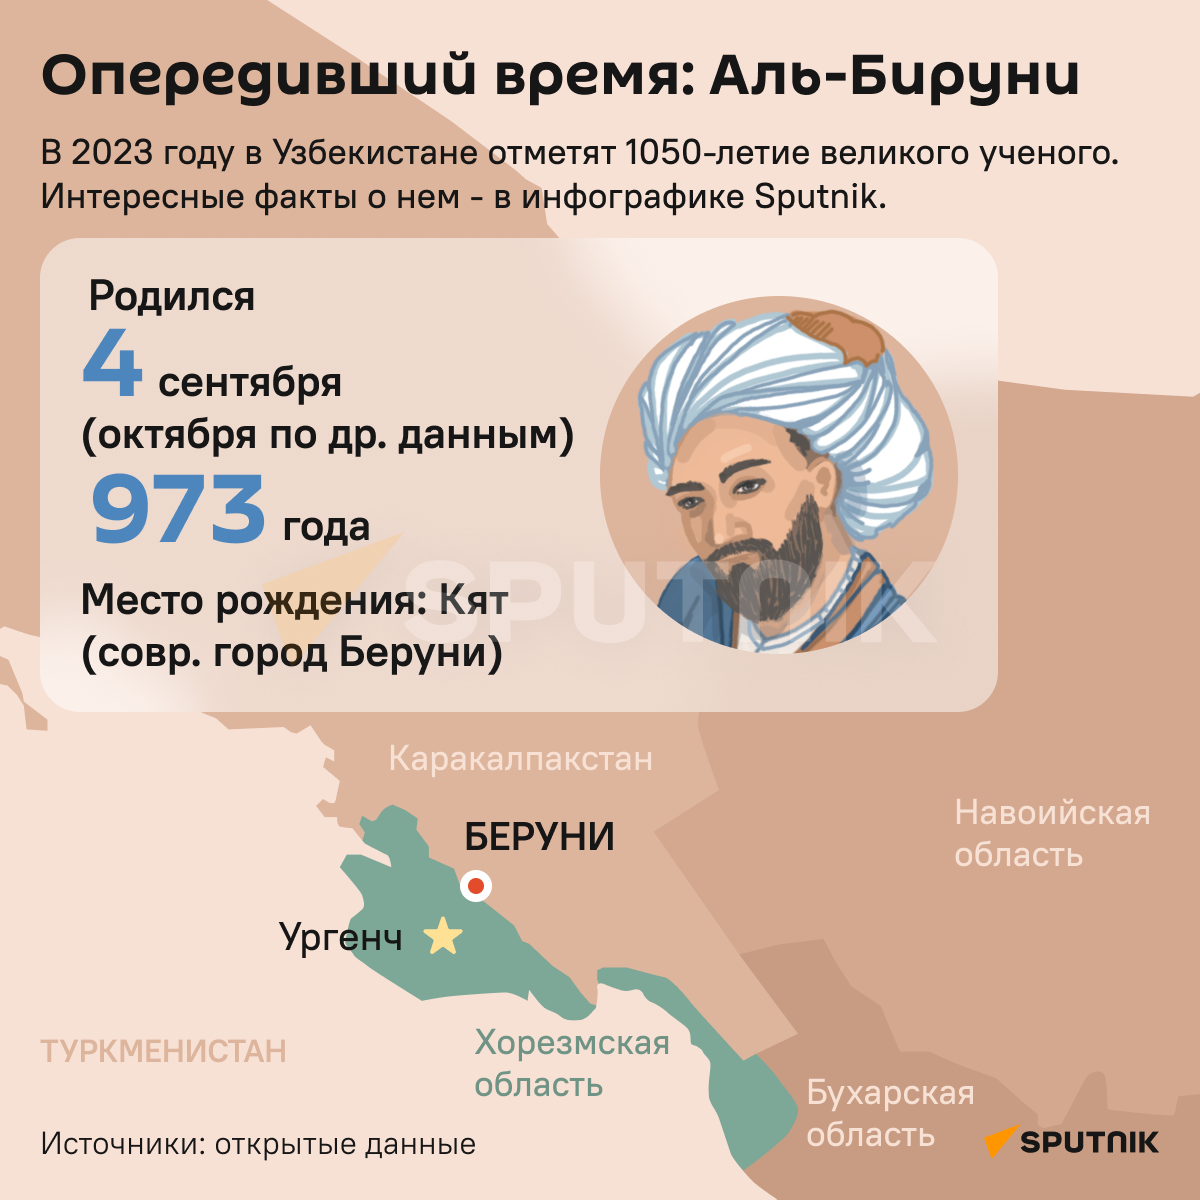 Аль-Бируни инфографика  - Sputnik Узбекистан